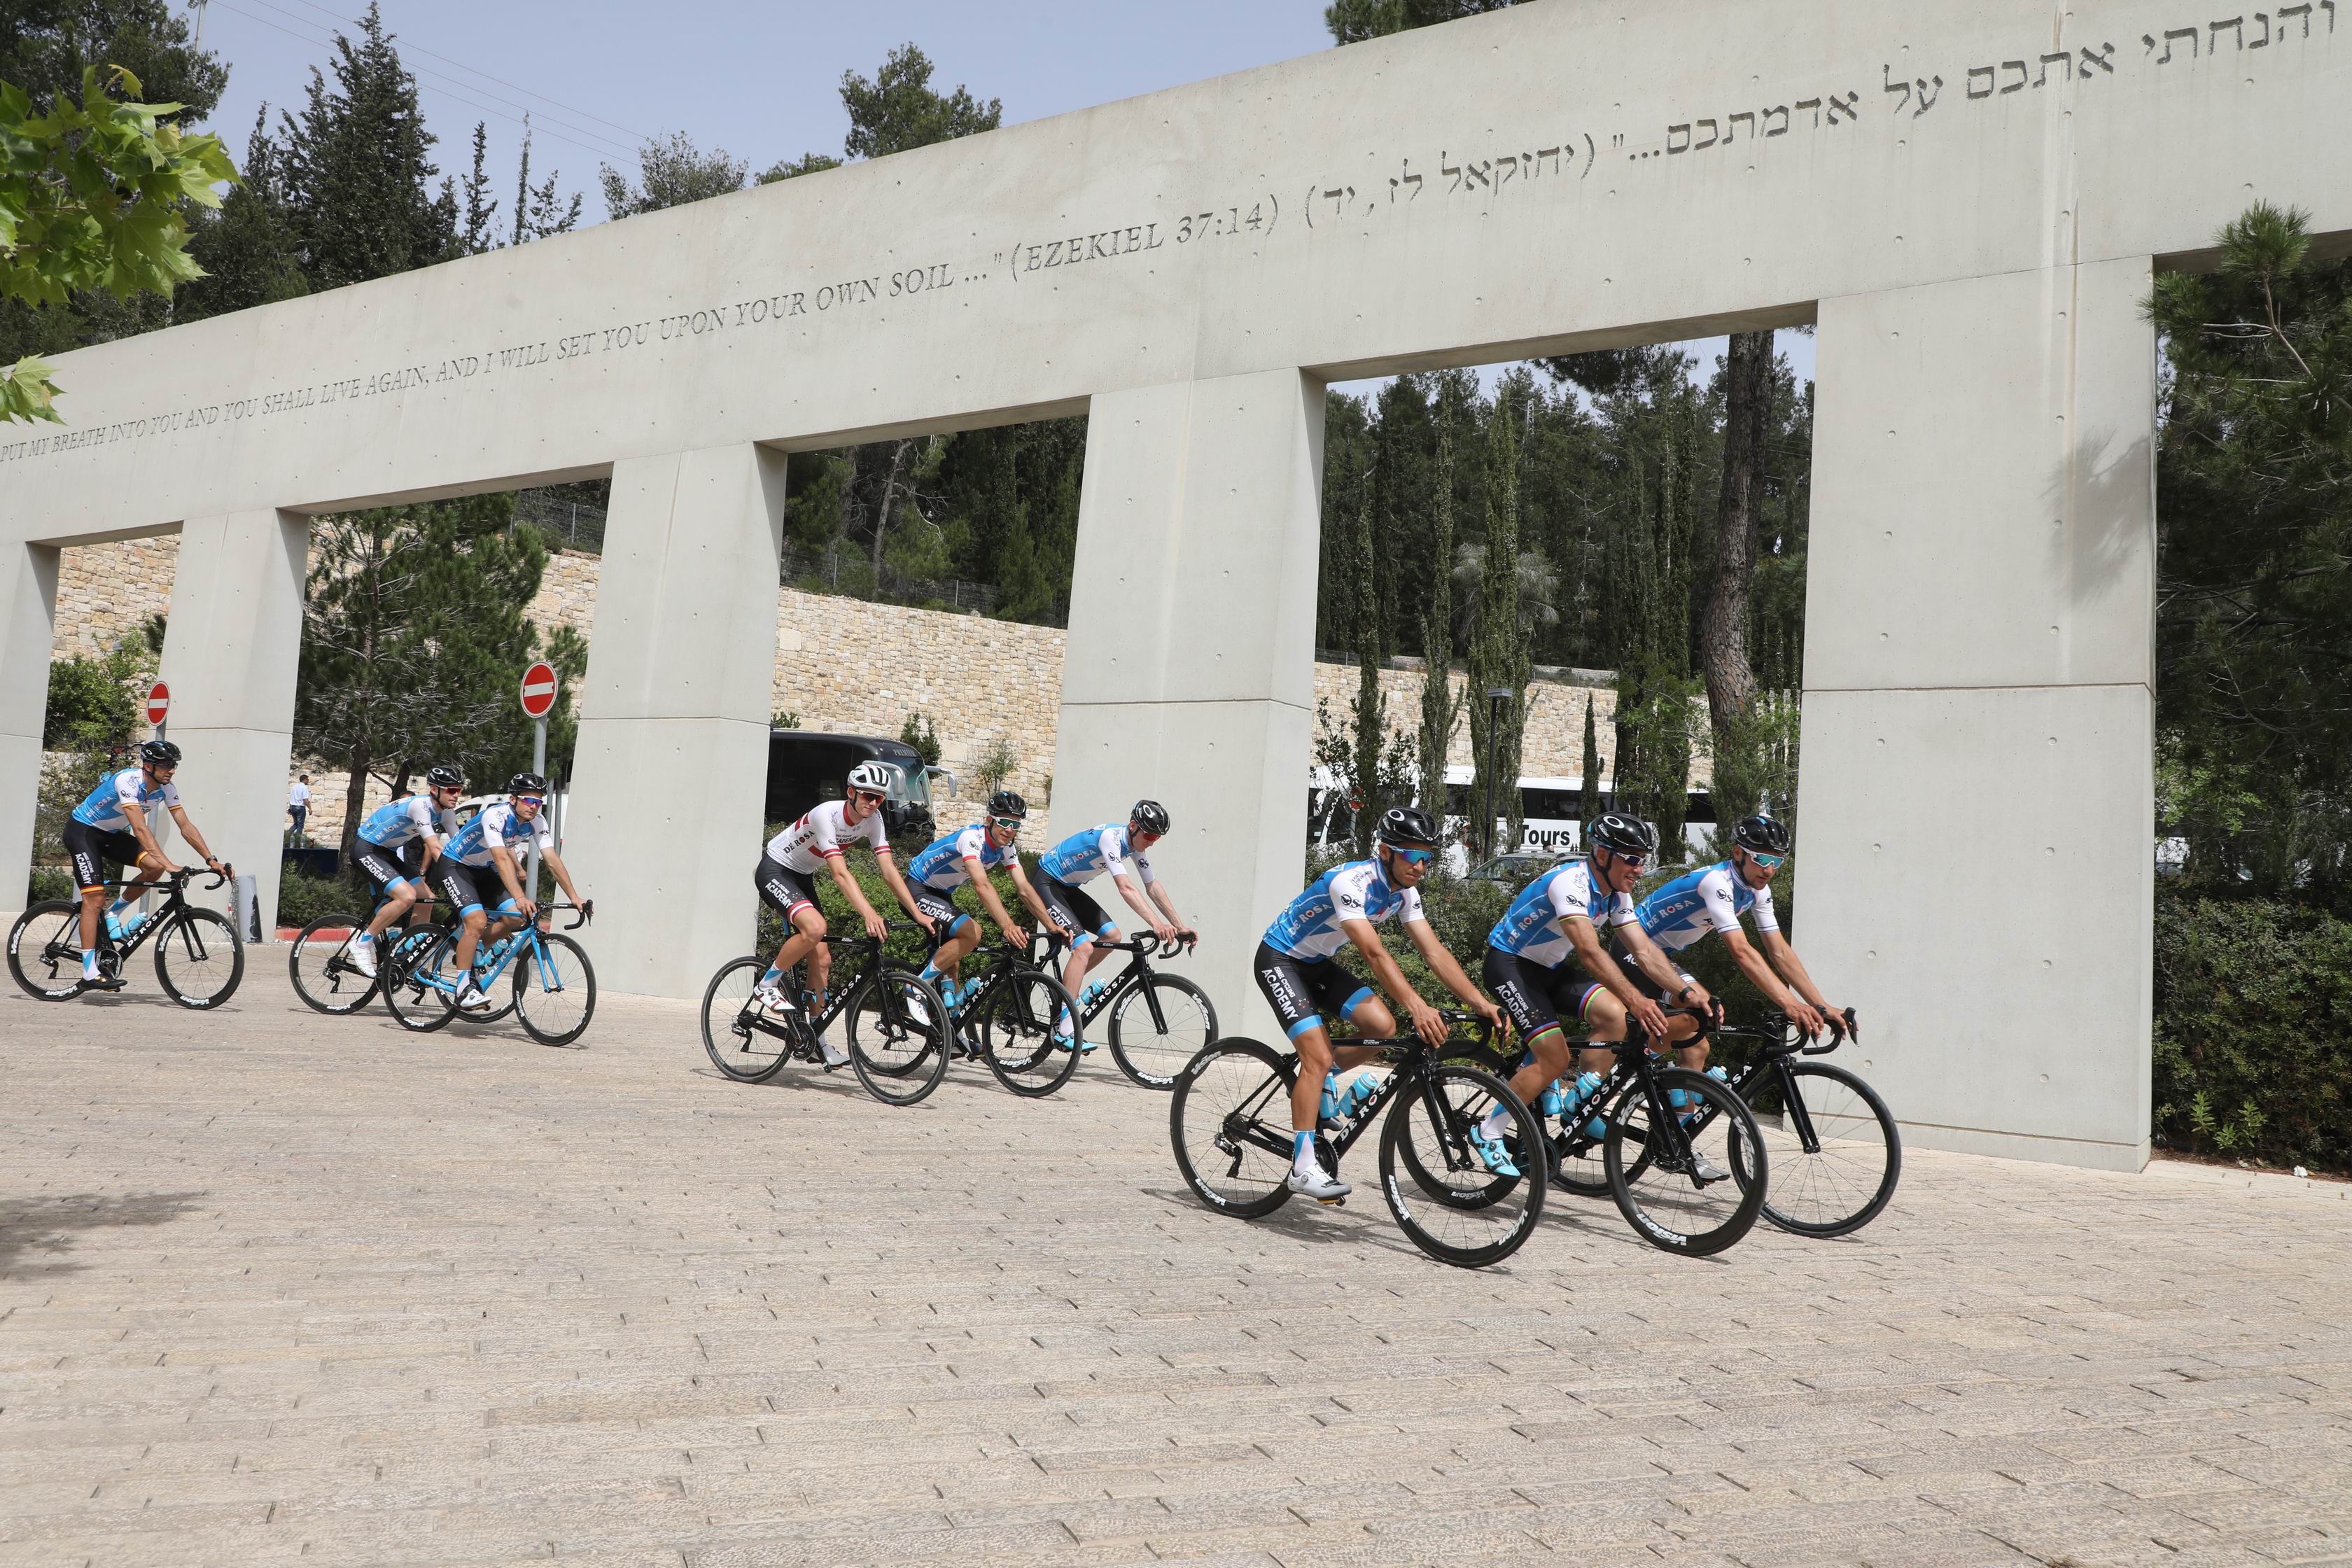 The cyclists begin their memorial ride, led by Giro d'Italia Big Start Honorary President Sylvan Adams